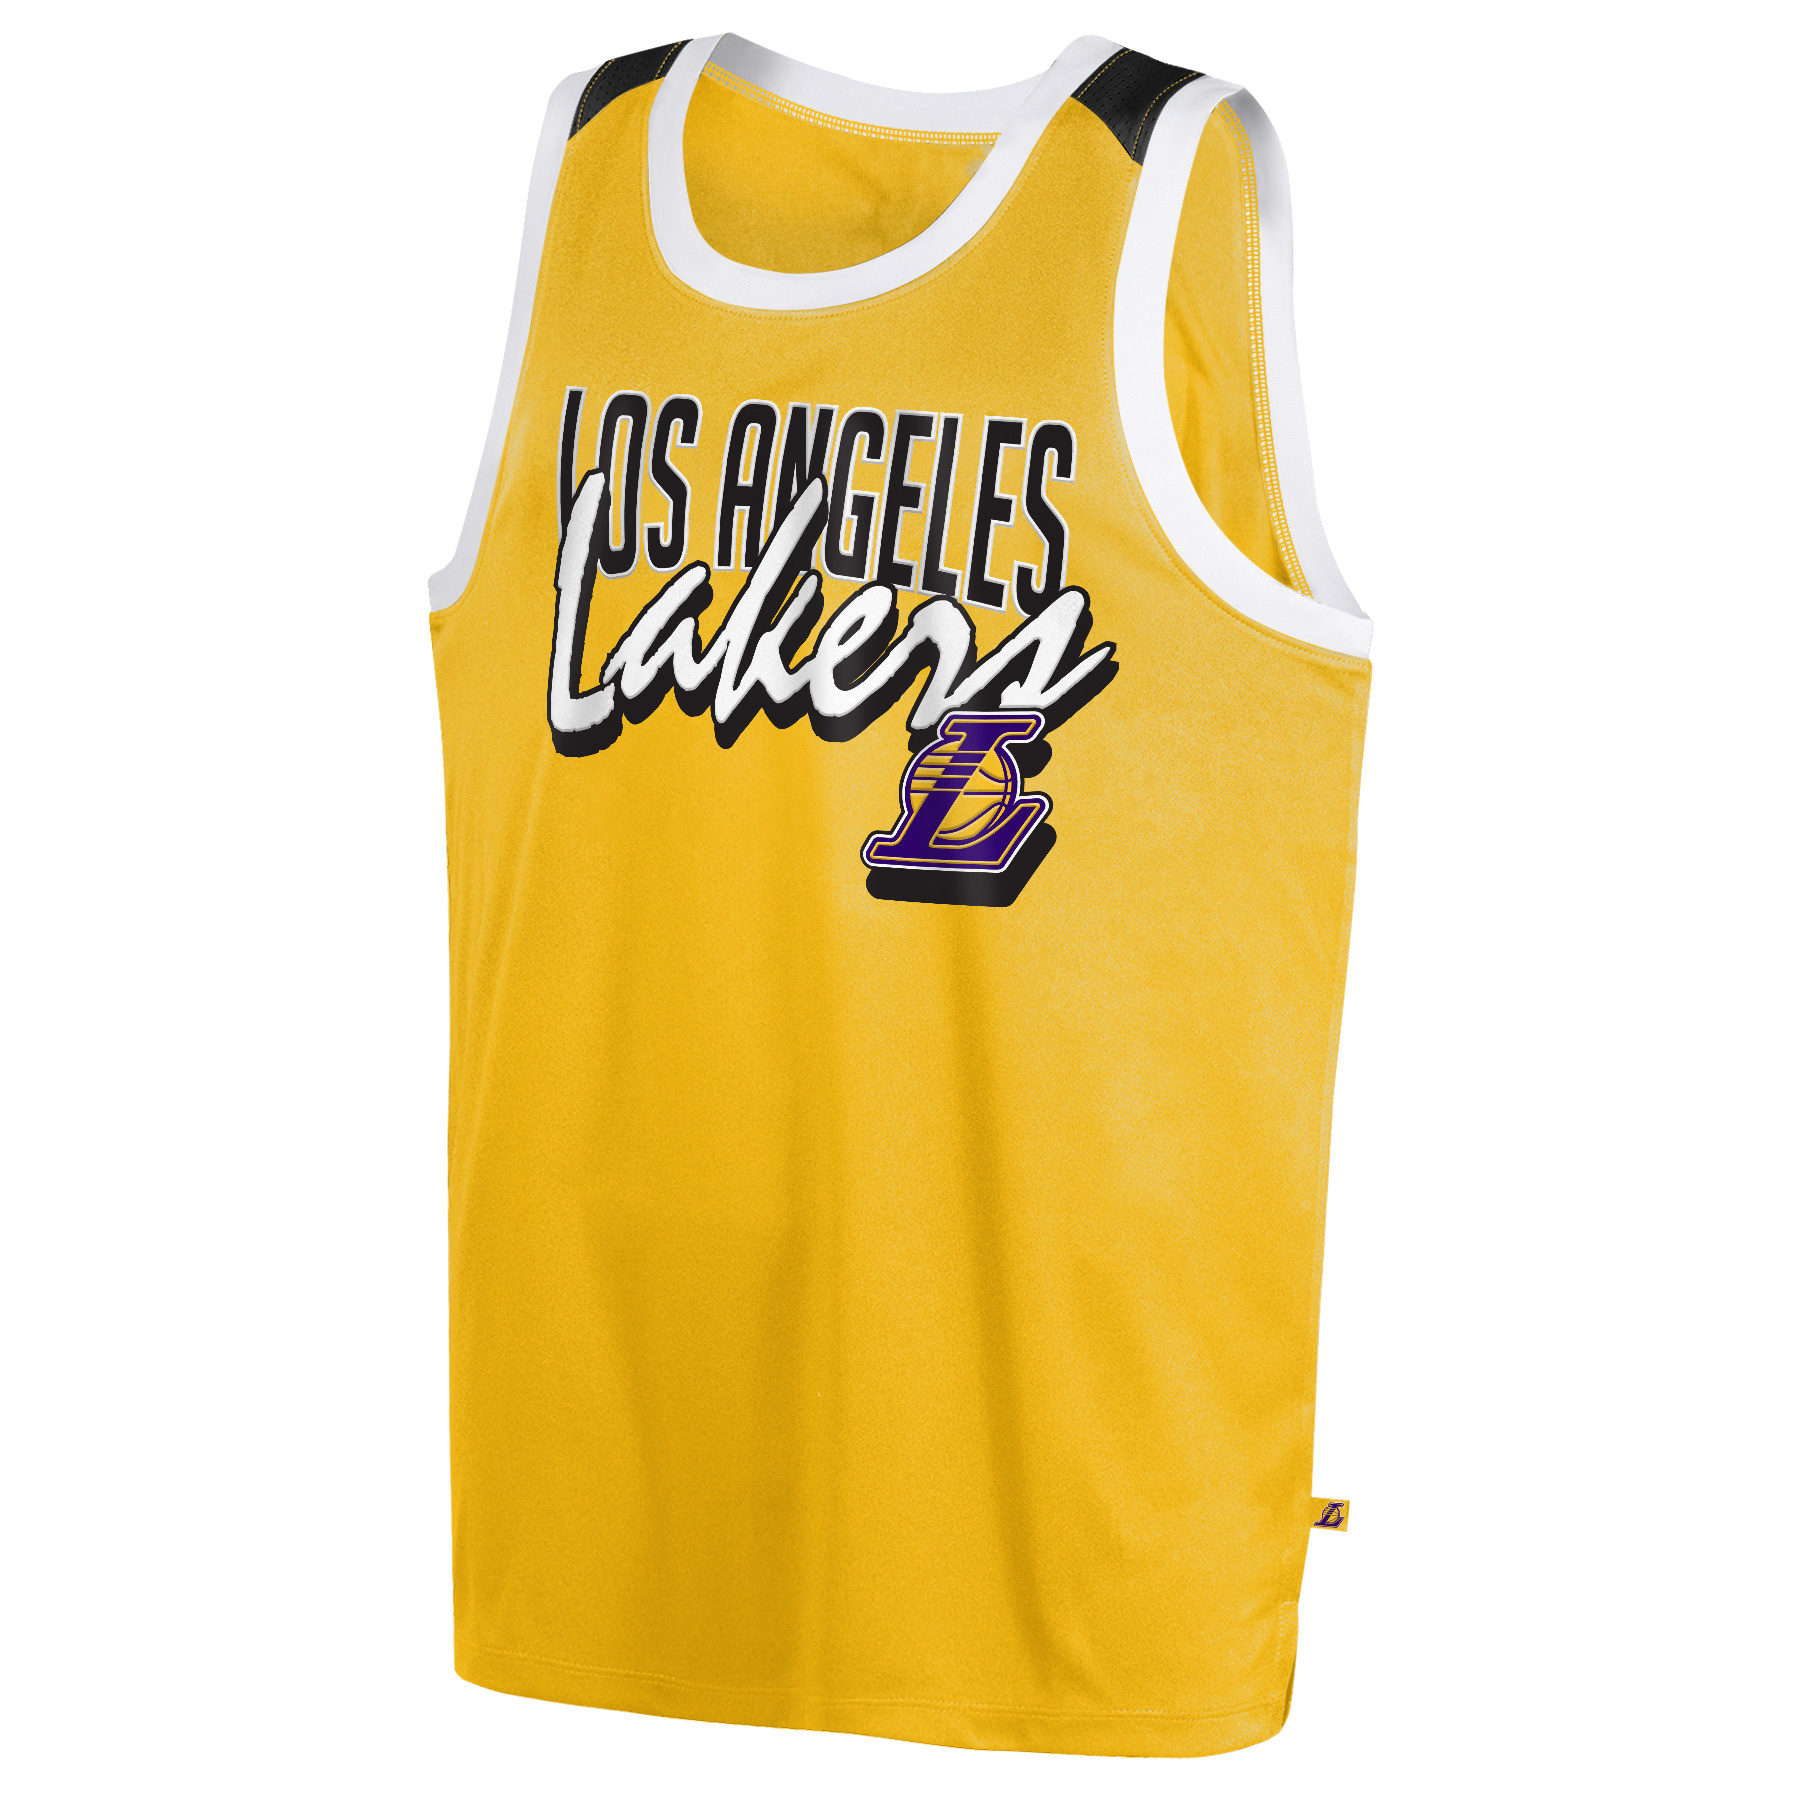 Men's New Era Purple Los Angeles Lakers Hoodie Sleeveless T-Shirt Size: Large